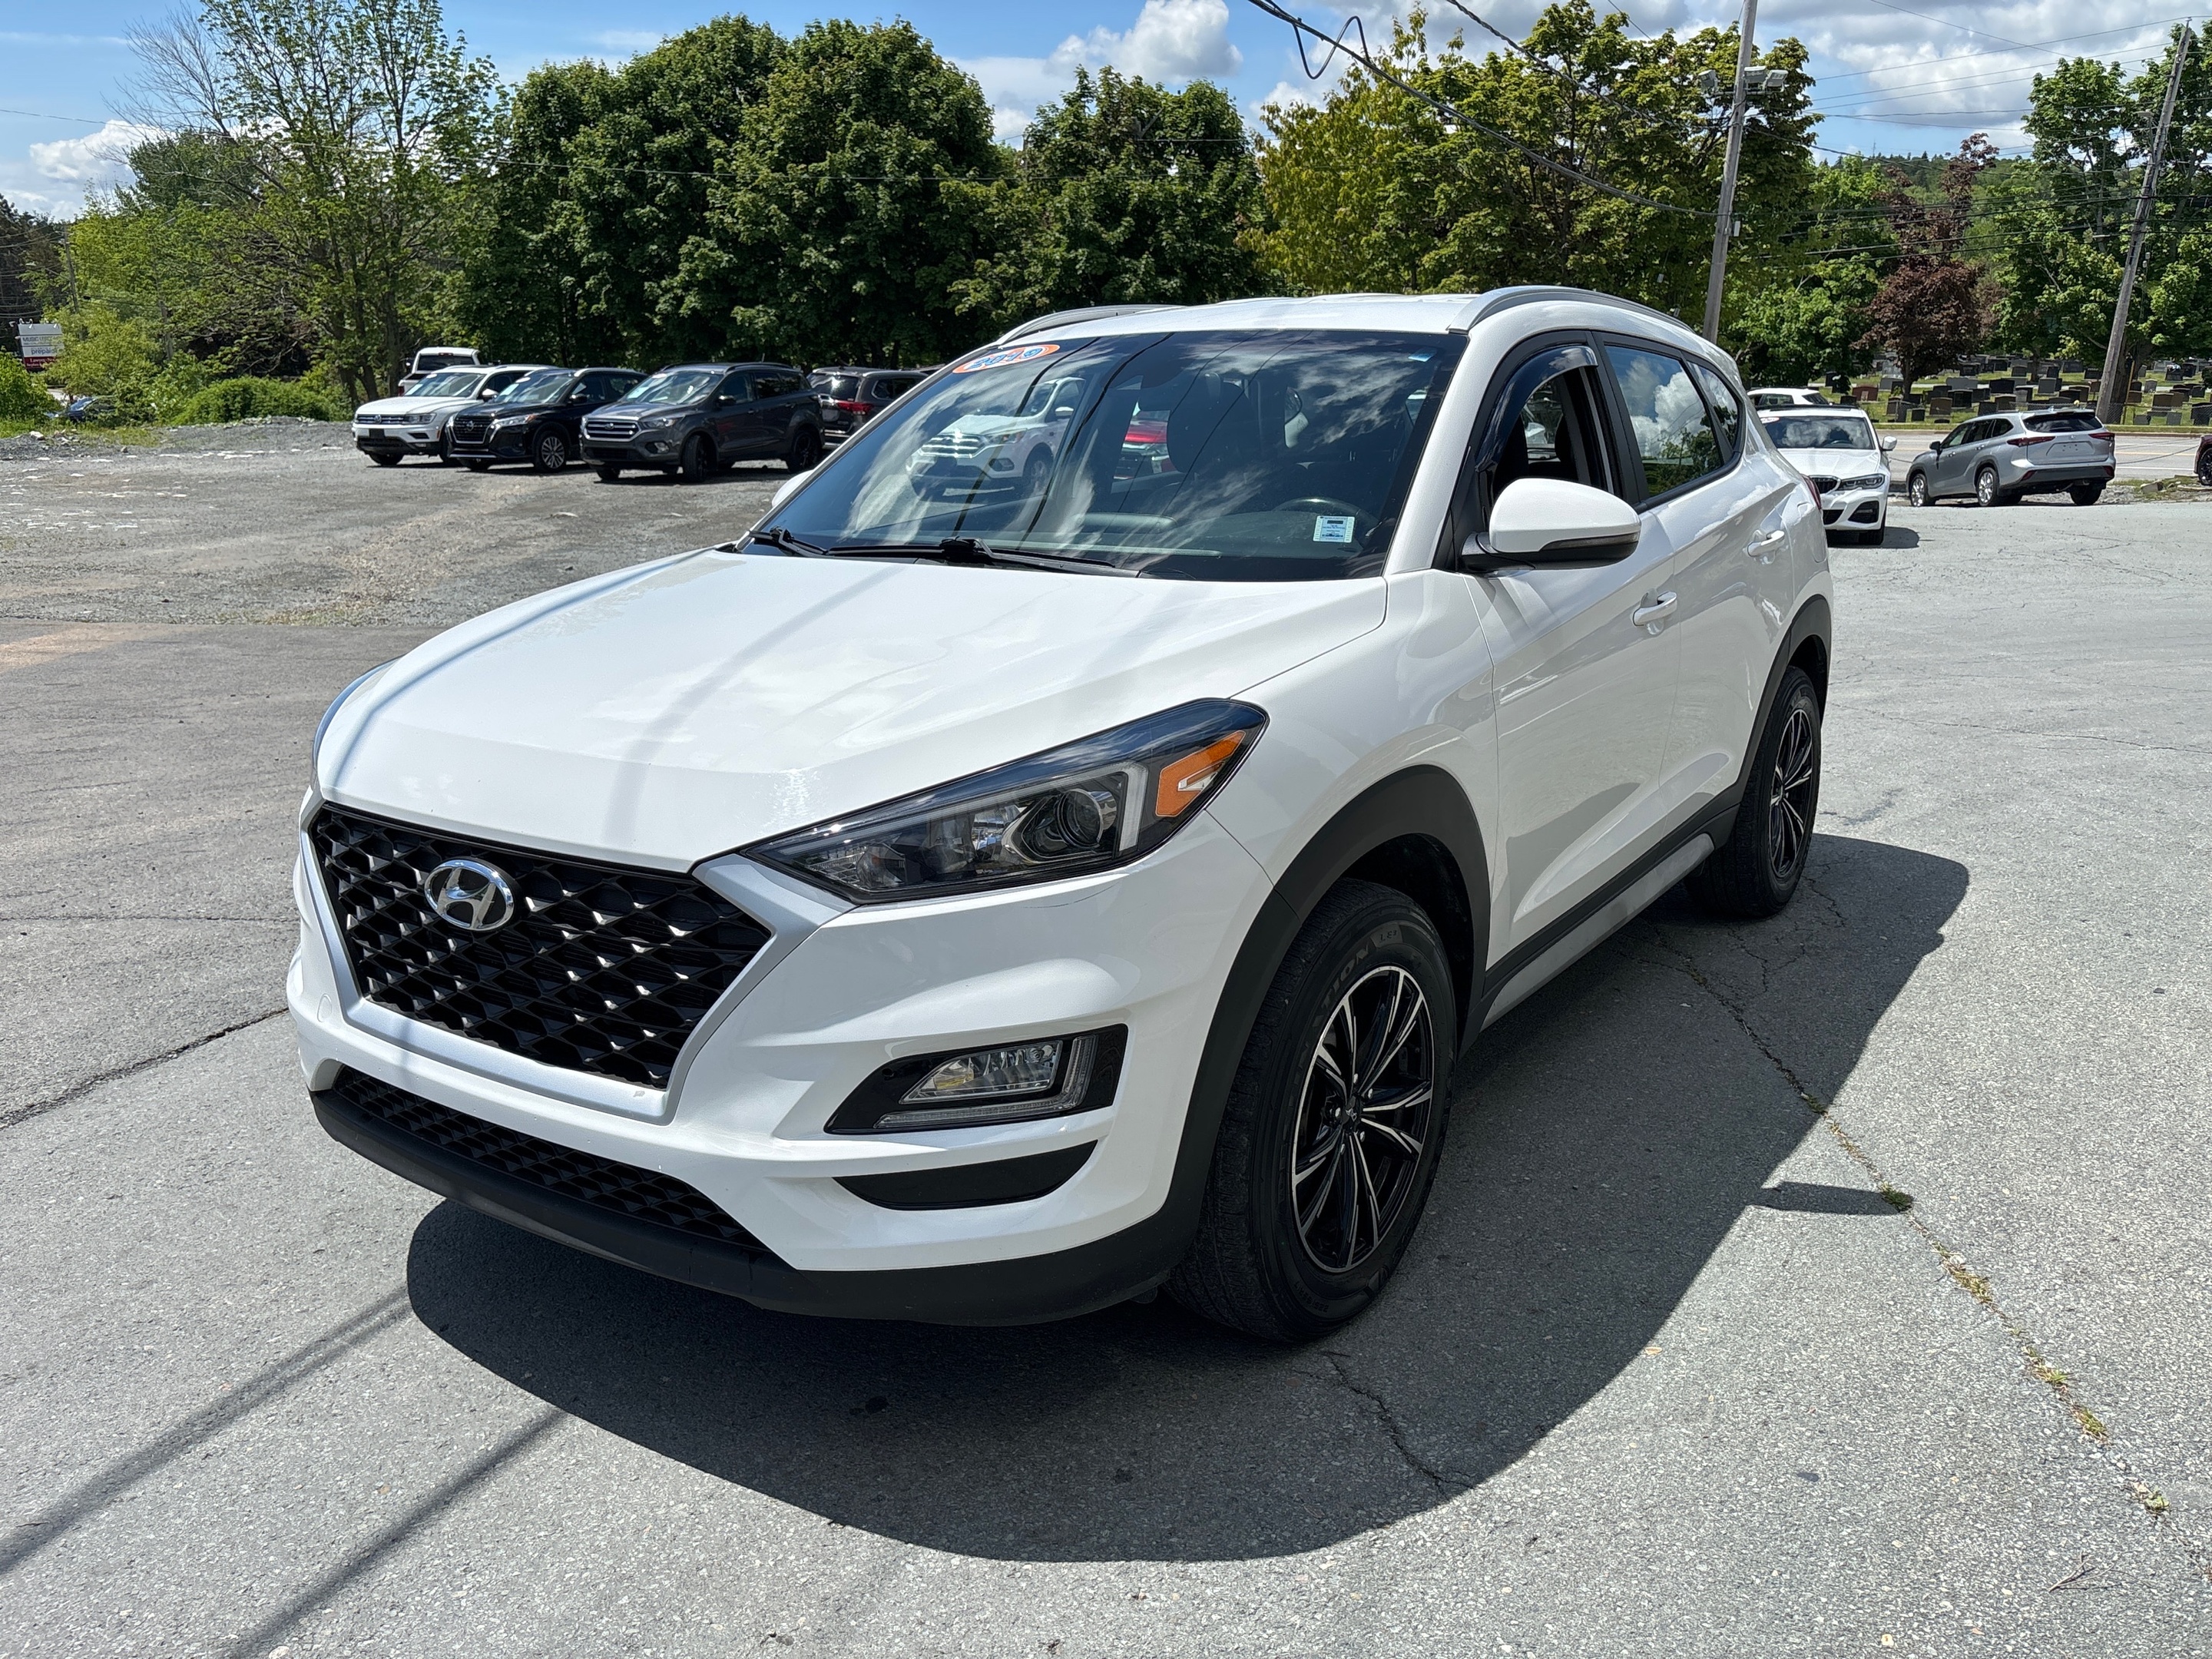 2019 Hyundai Tucson Preferred